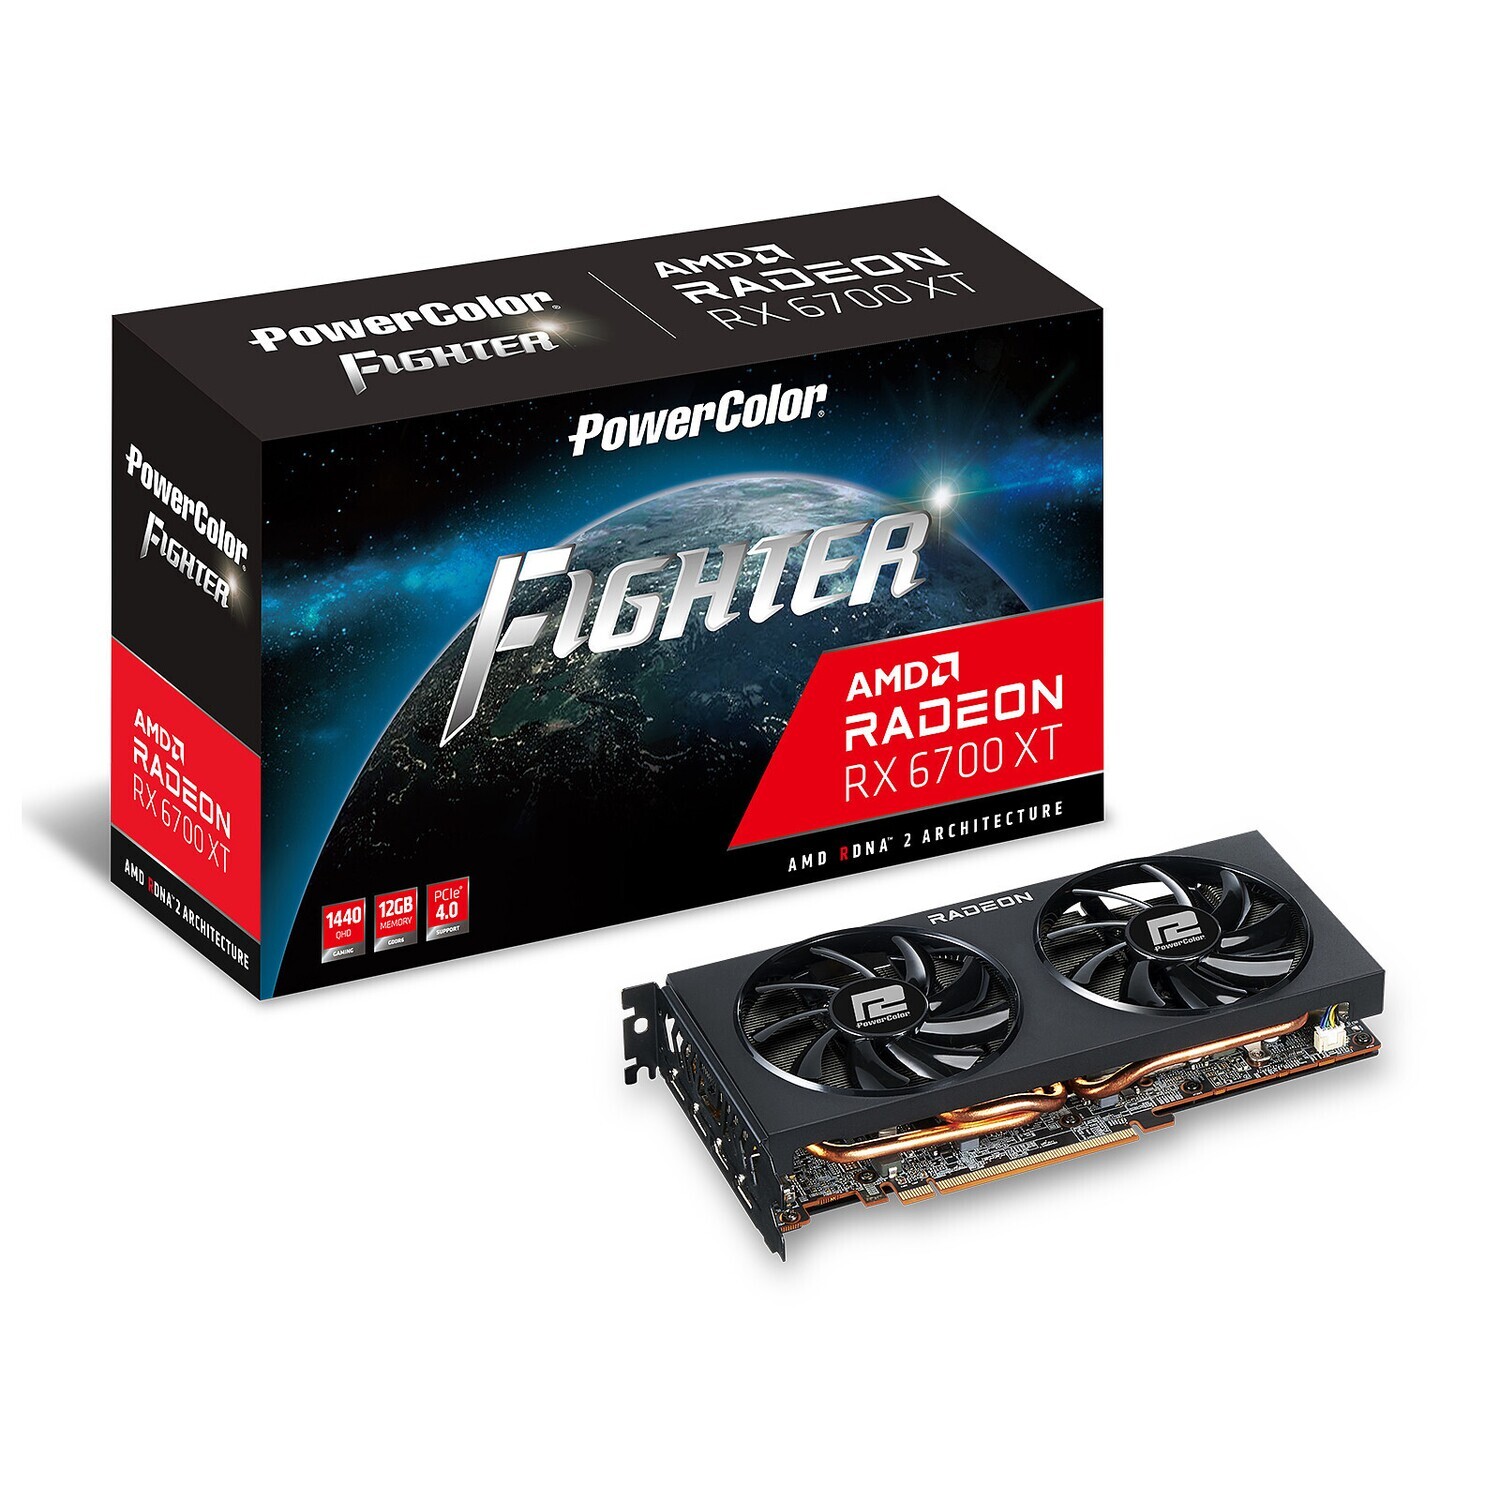 PowerColor Fighter AMD Radeon RX 6700 XT, 12GB GDDR6